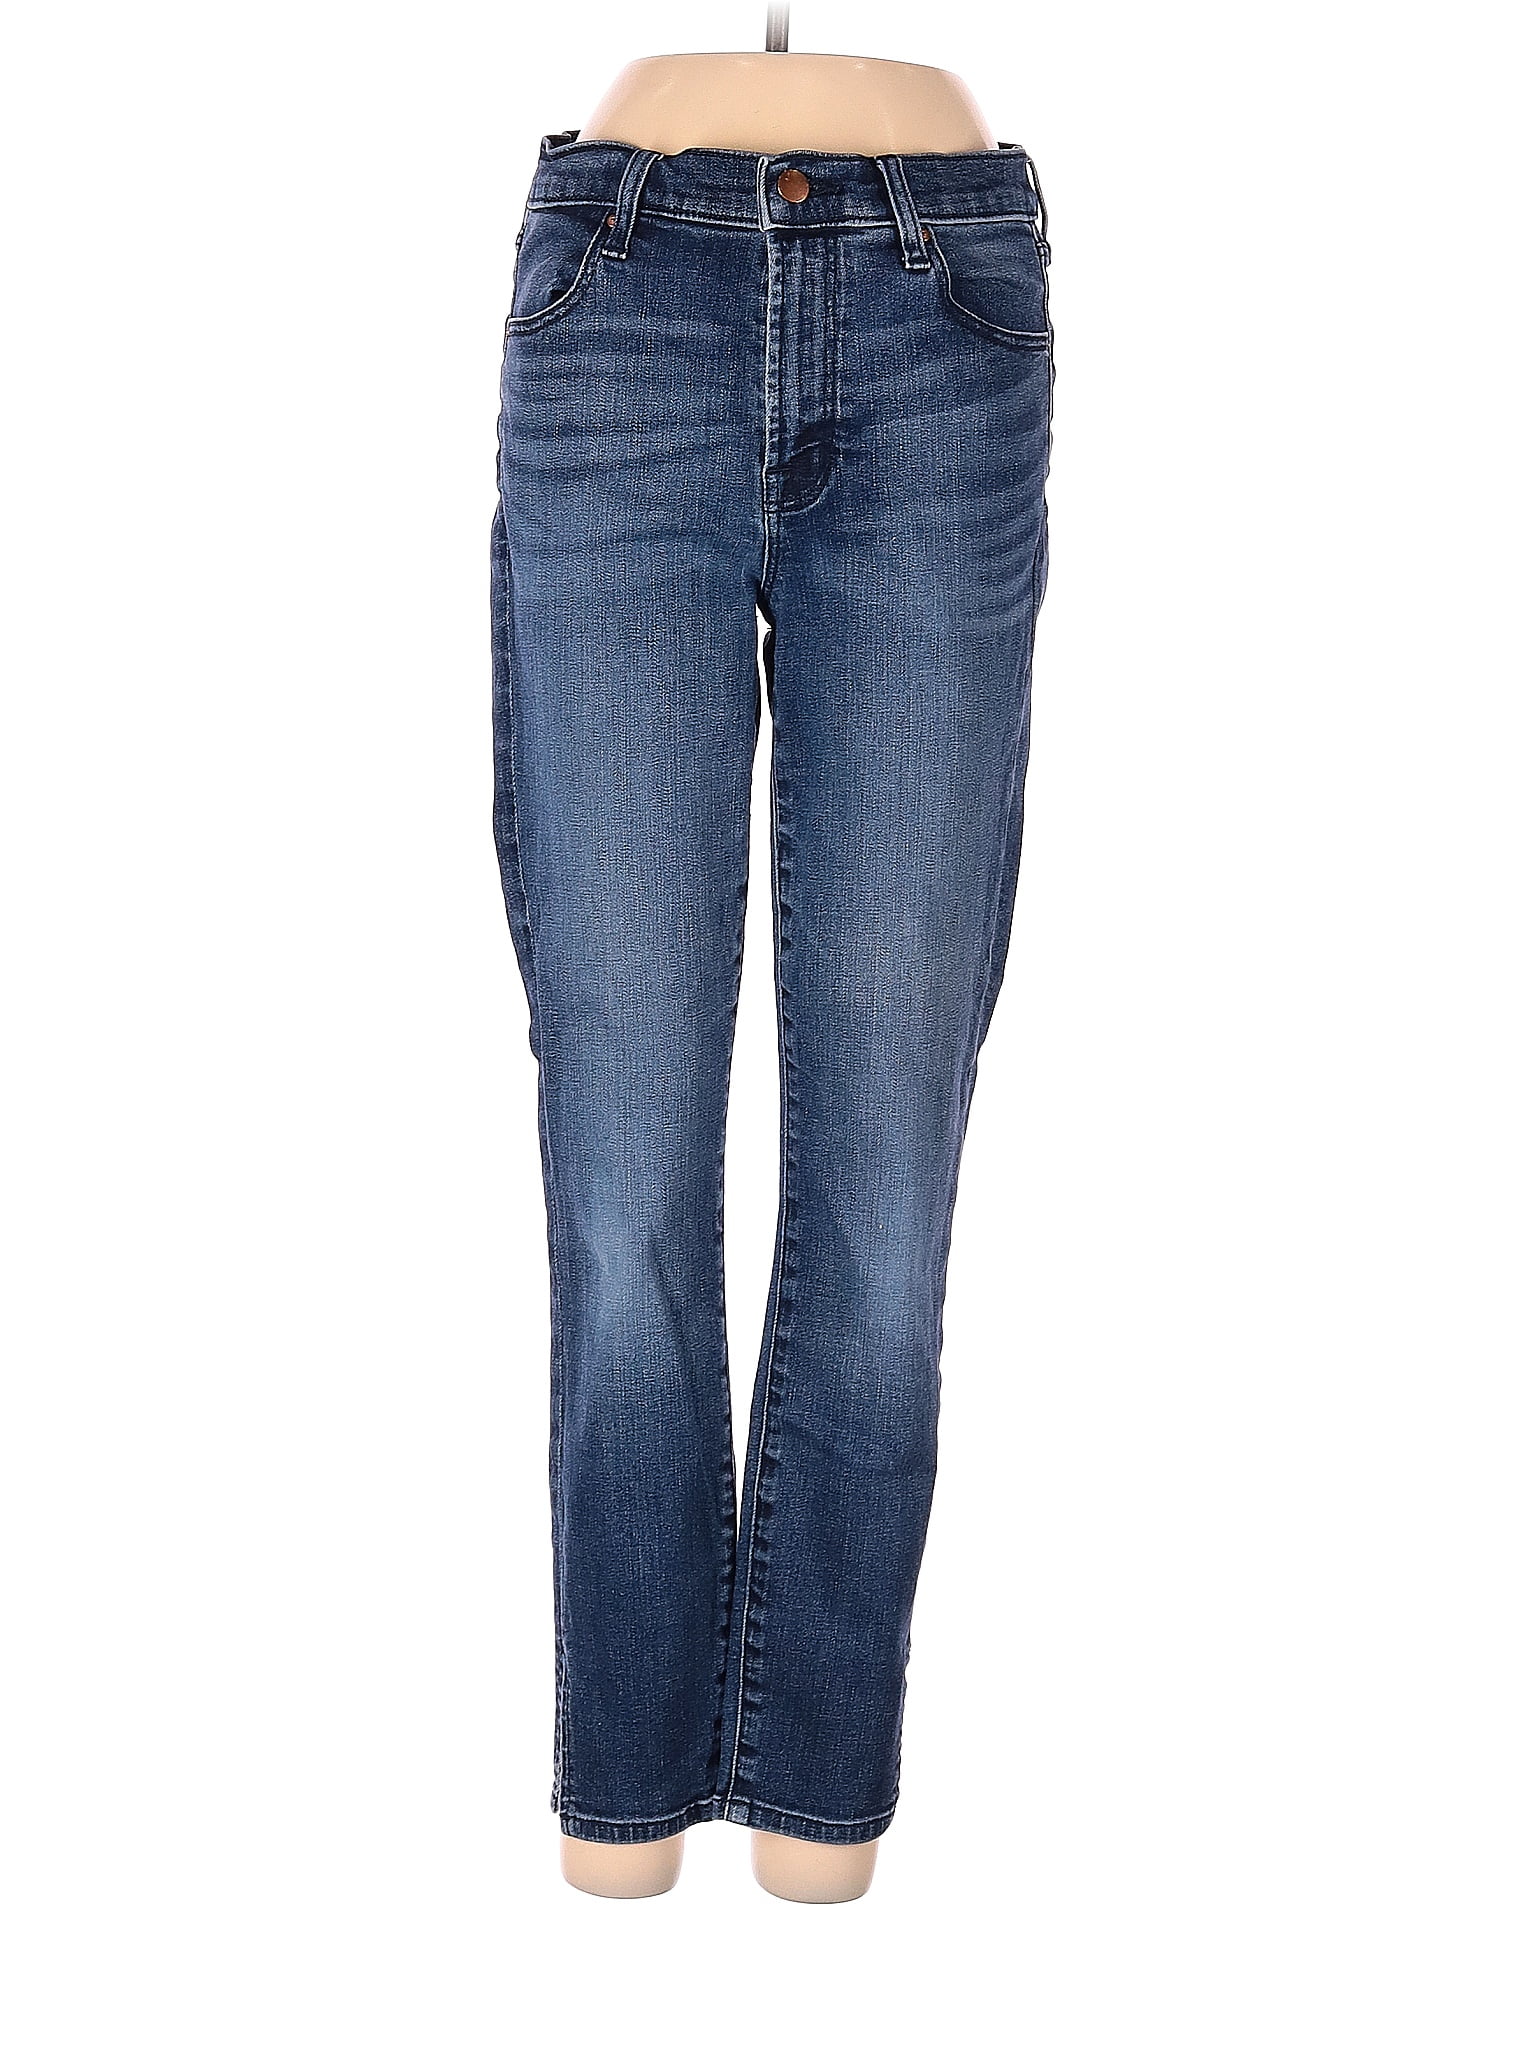 J Brand Blue Jeans 27 Waist - 90% off | thredUP